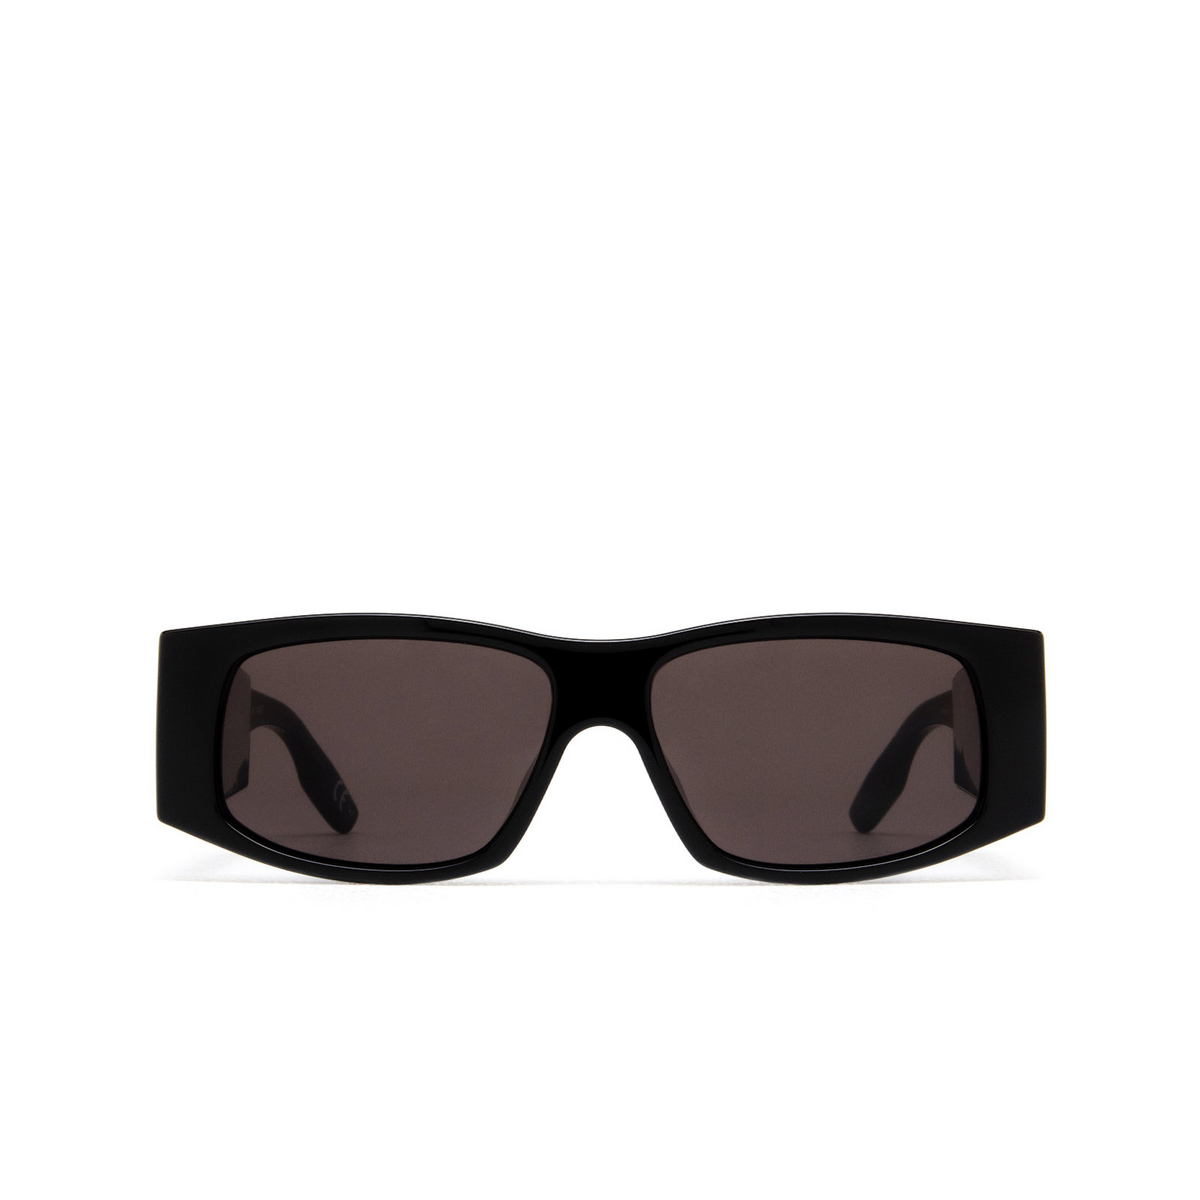 Balenciaga LED Frame Sunglasses 001 Black - front view